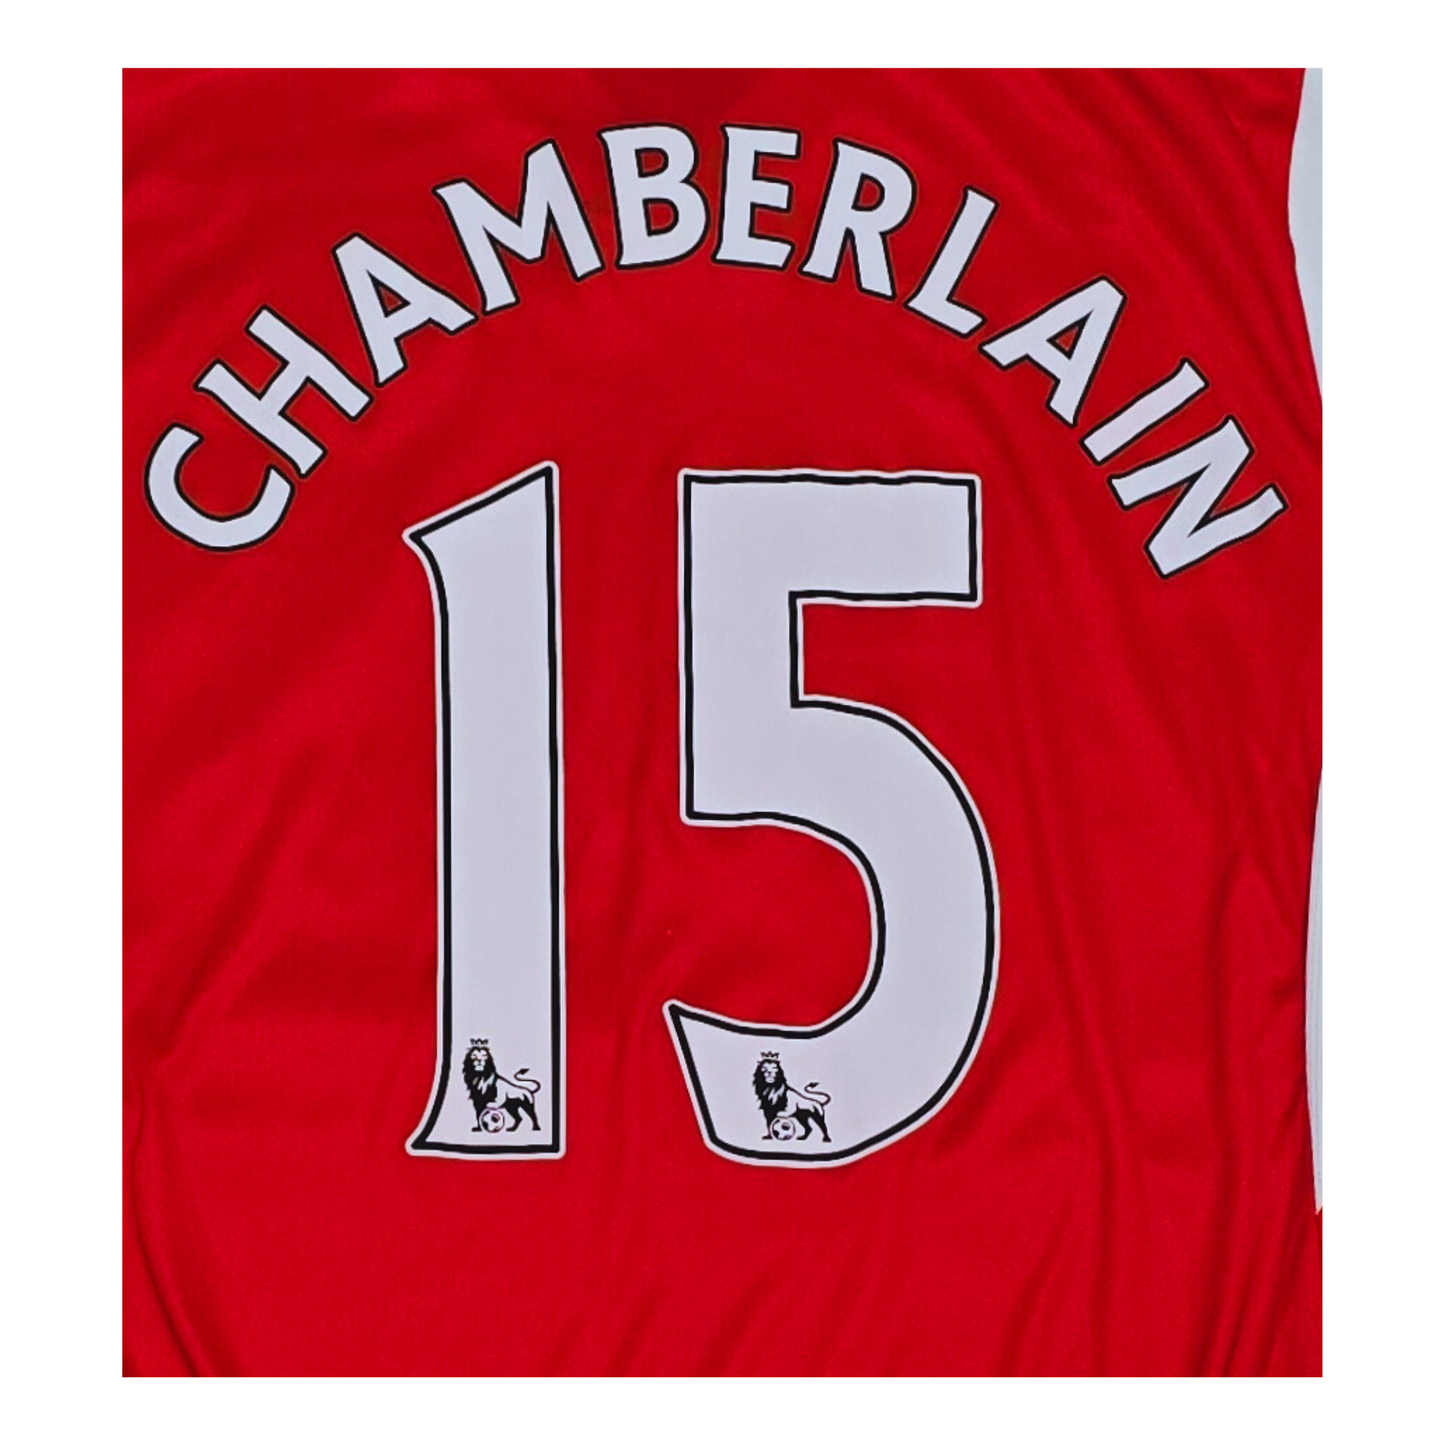 Arsenal 2016/17 Home Jersey - Alex Oxlade-Chamberlain